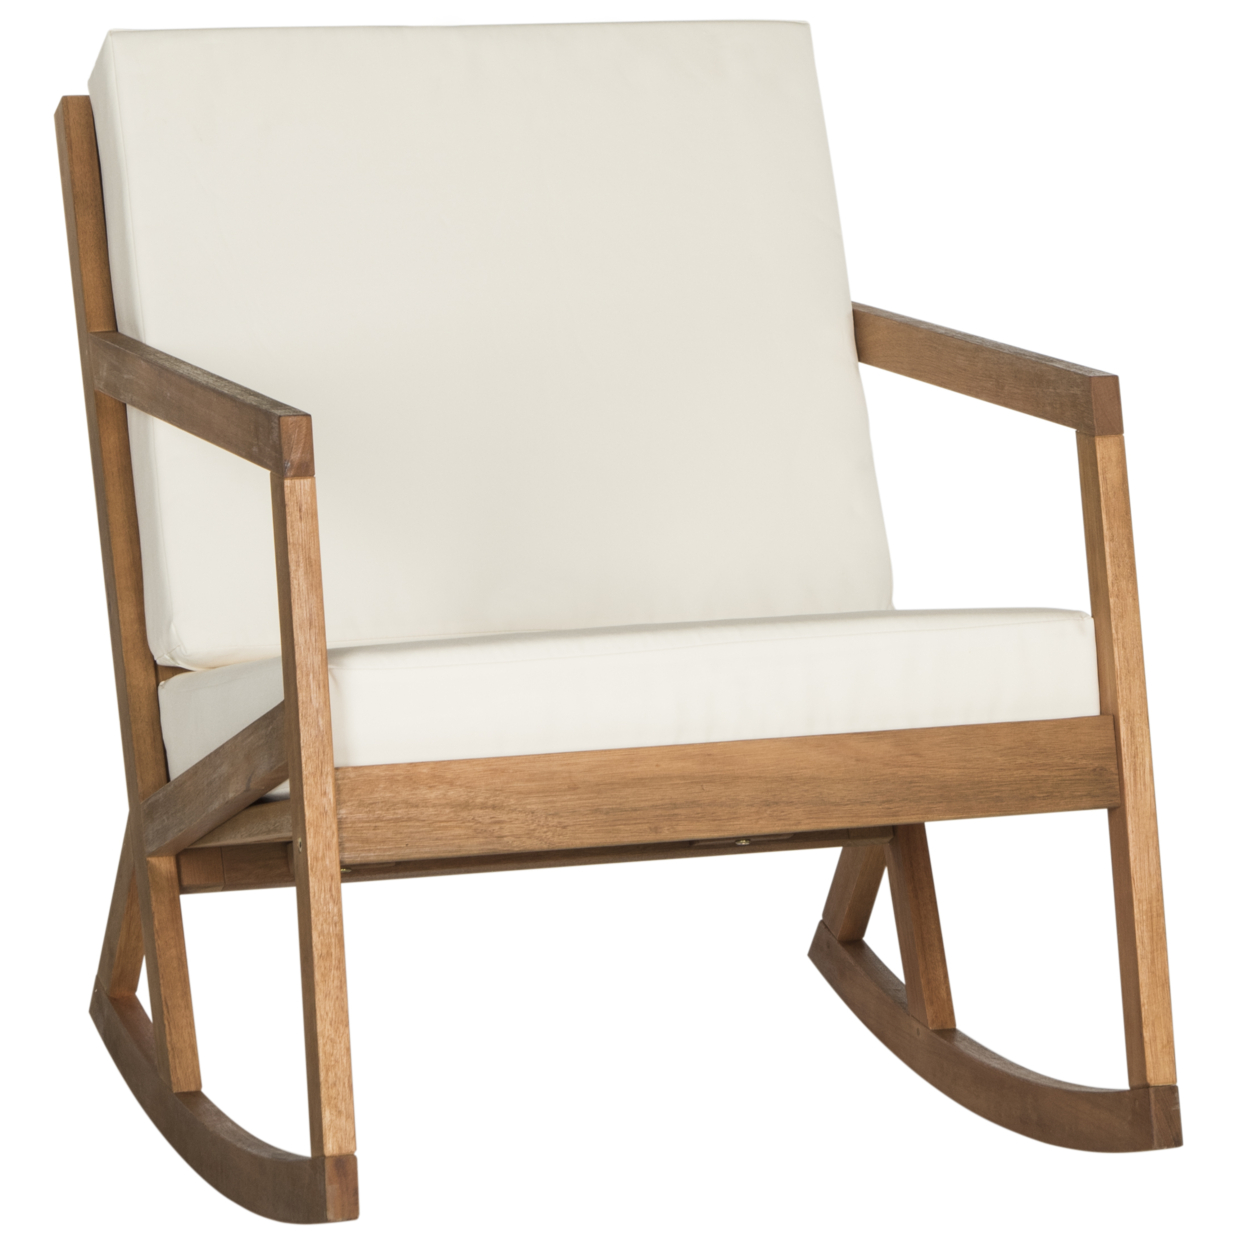 SAFAVIEH Outdoor Collection Vernon Rocking Chair Natural/Beige